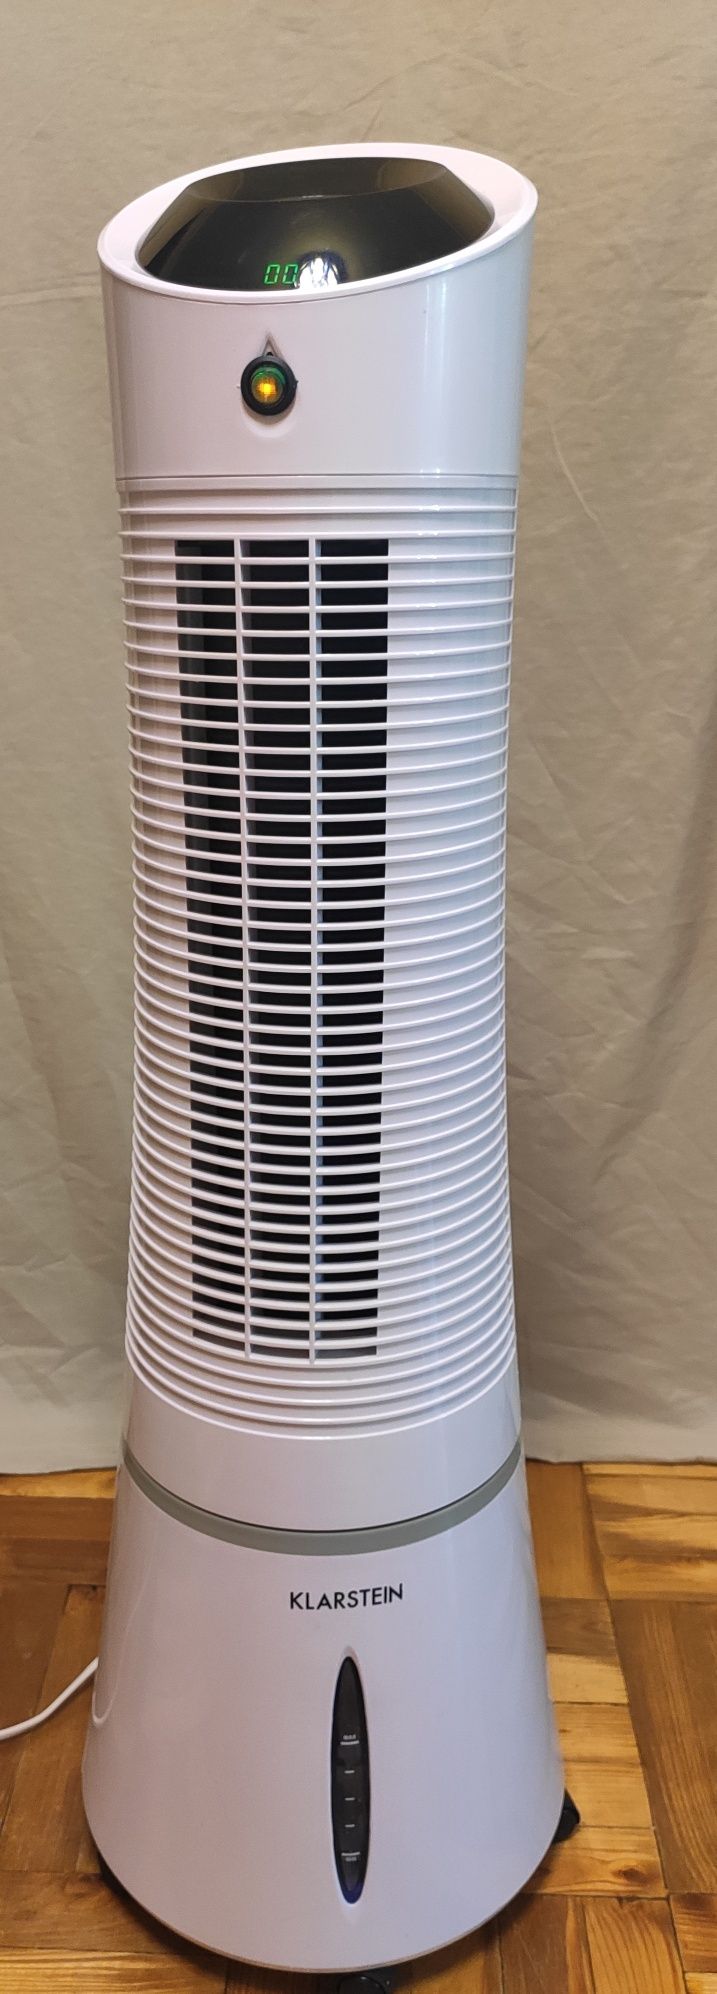 Мини-кондиционер вентилятор  KLARSTEIN Skyscraper Ice 4в1 по цене вент